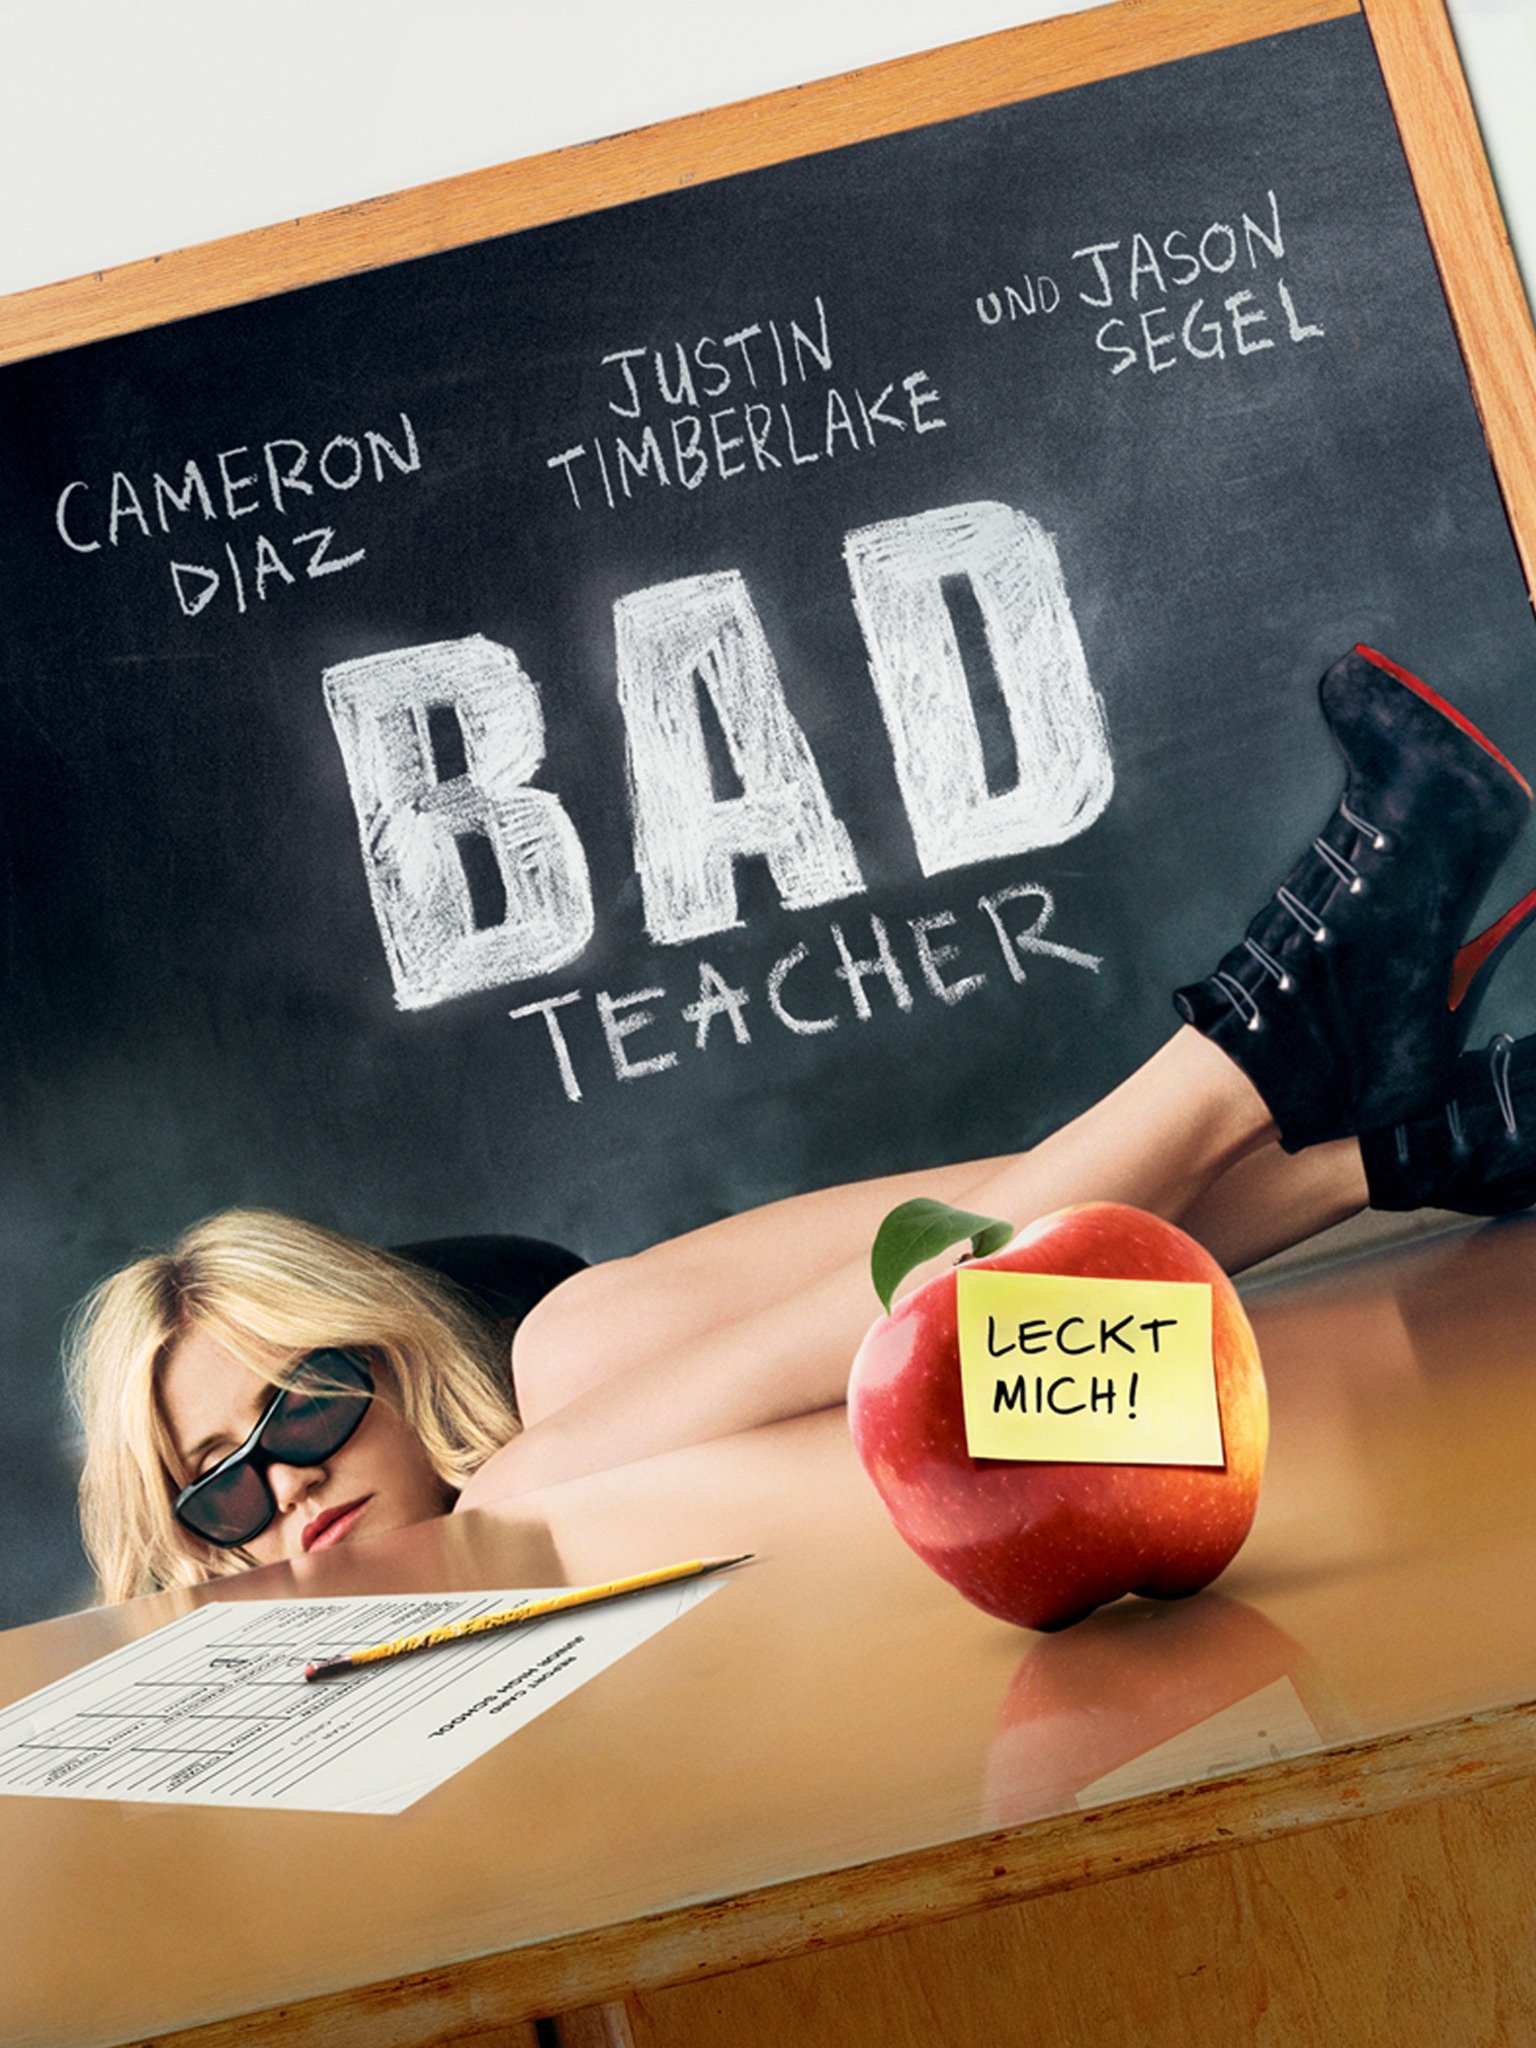 bad teacher movie cast